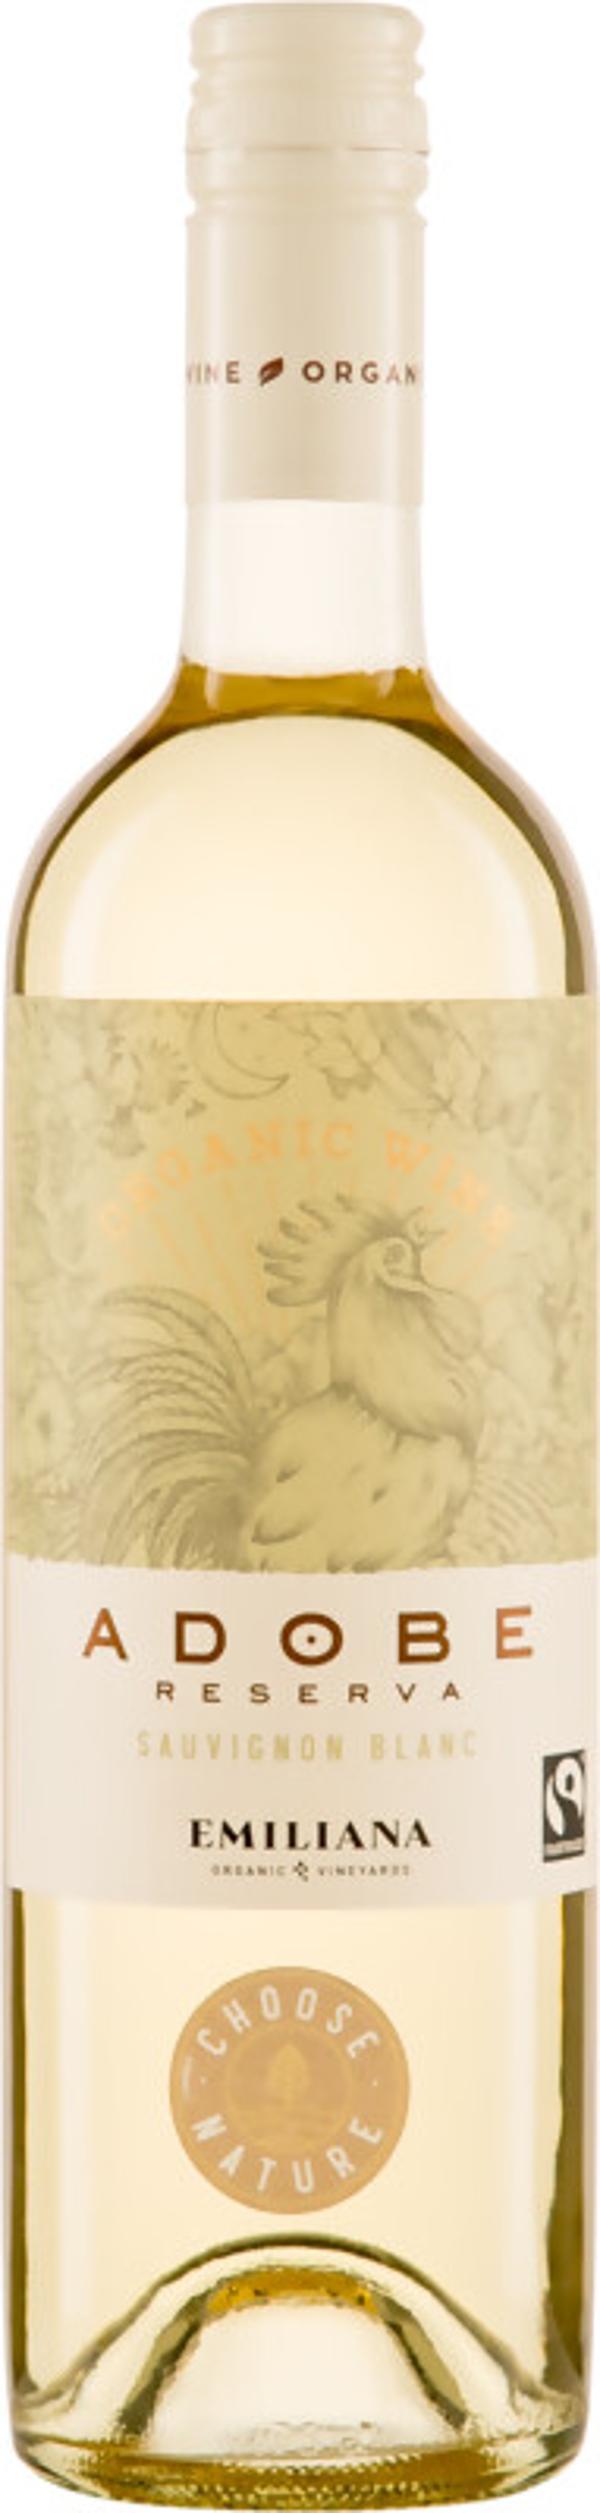 Produktfoto zu ADOBE Sauvignon Blanc Reserva, trocken - 0,75l